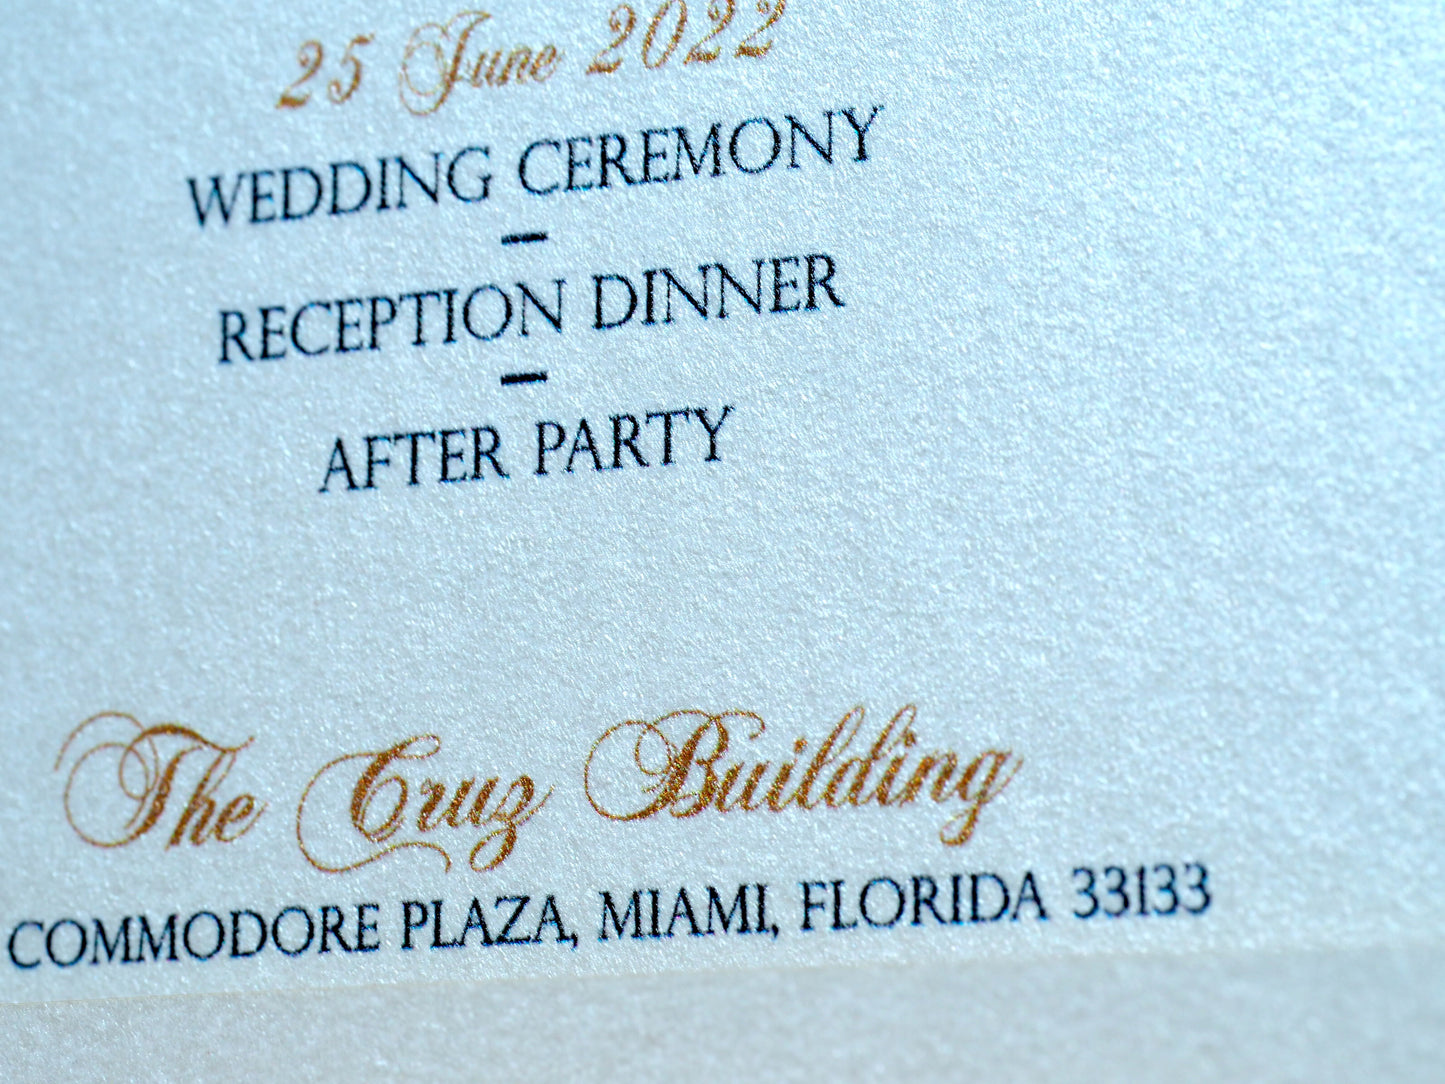 Miami Florida Commodore Plaza. Wedding invitation pop up box folded card. The Cruz Building.